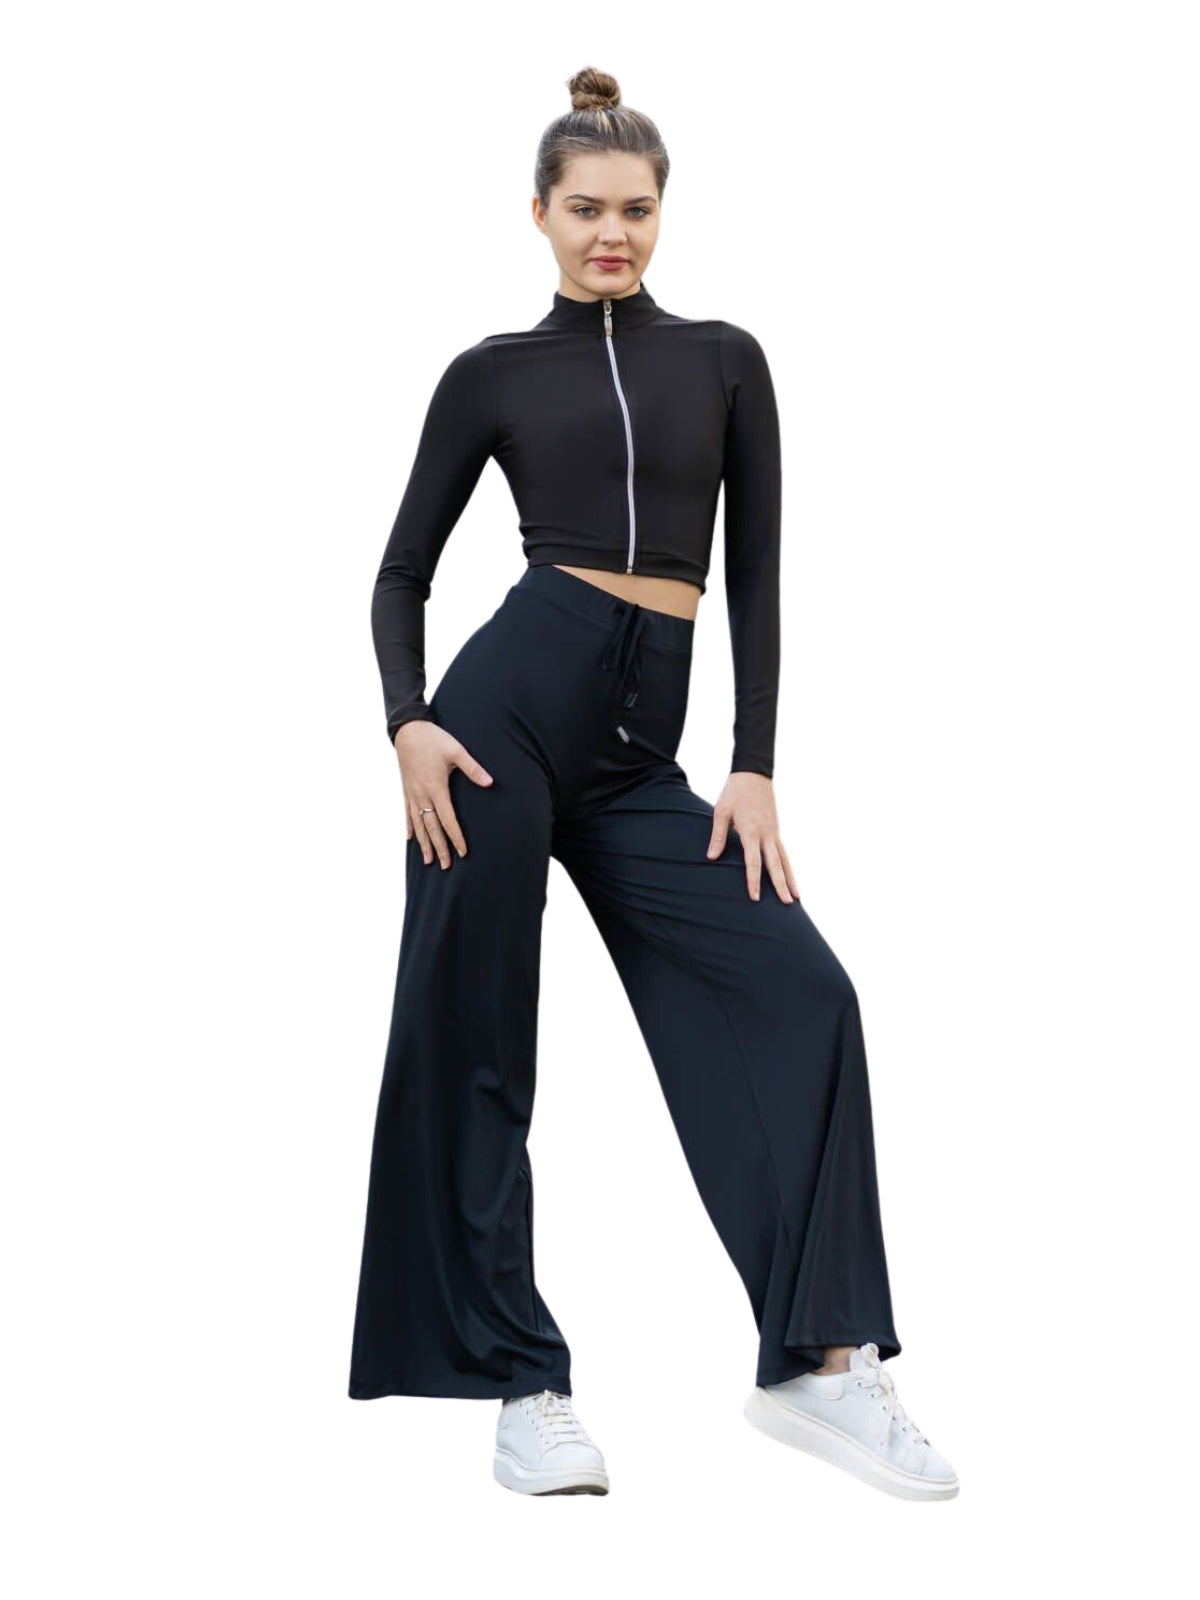 359 Bombay pantalons de yoga noir